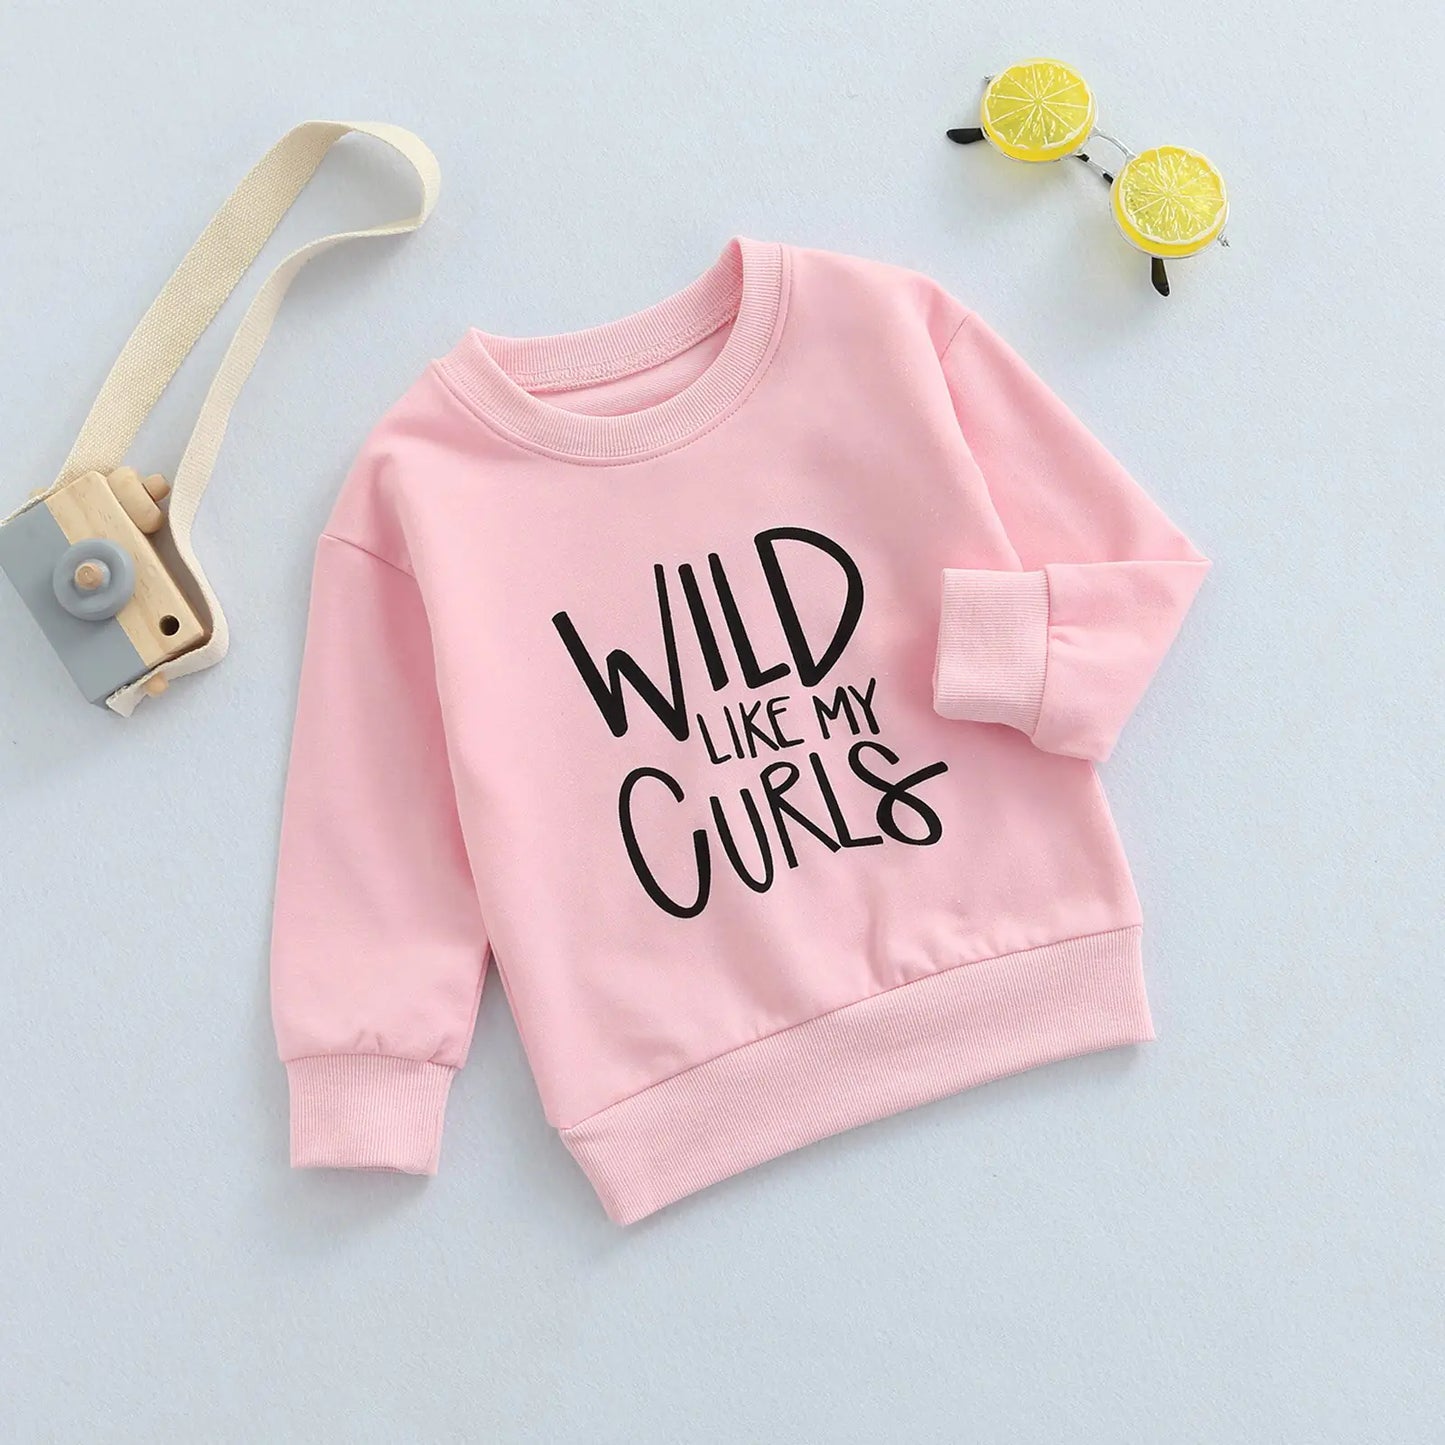 "WILD LIKE MY CURLS" Baby Sweatshirt